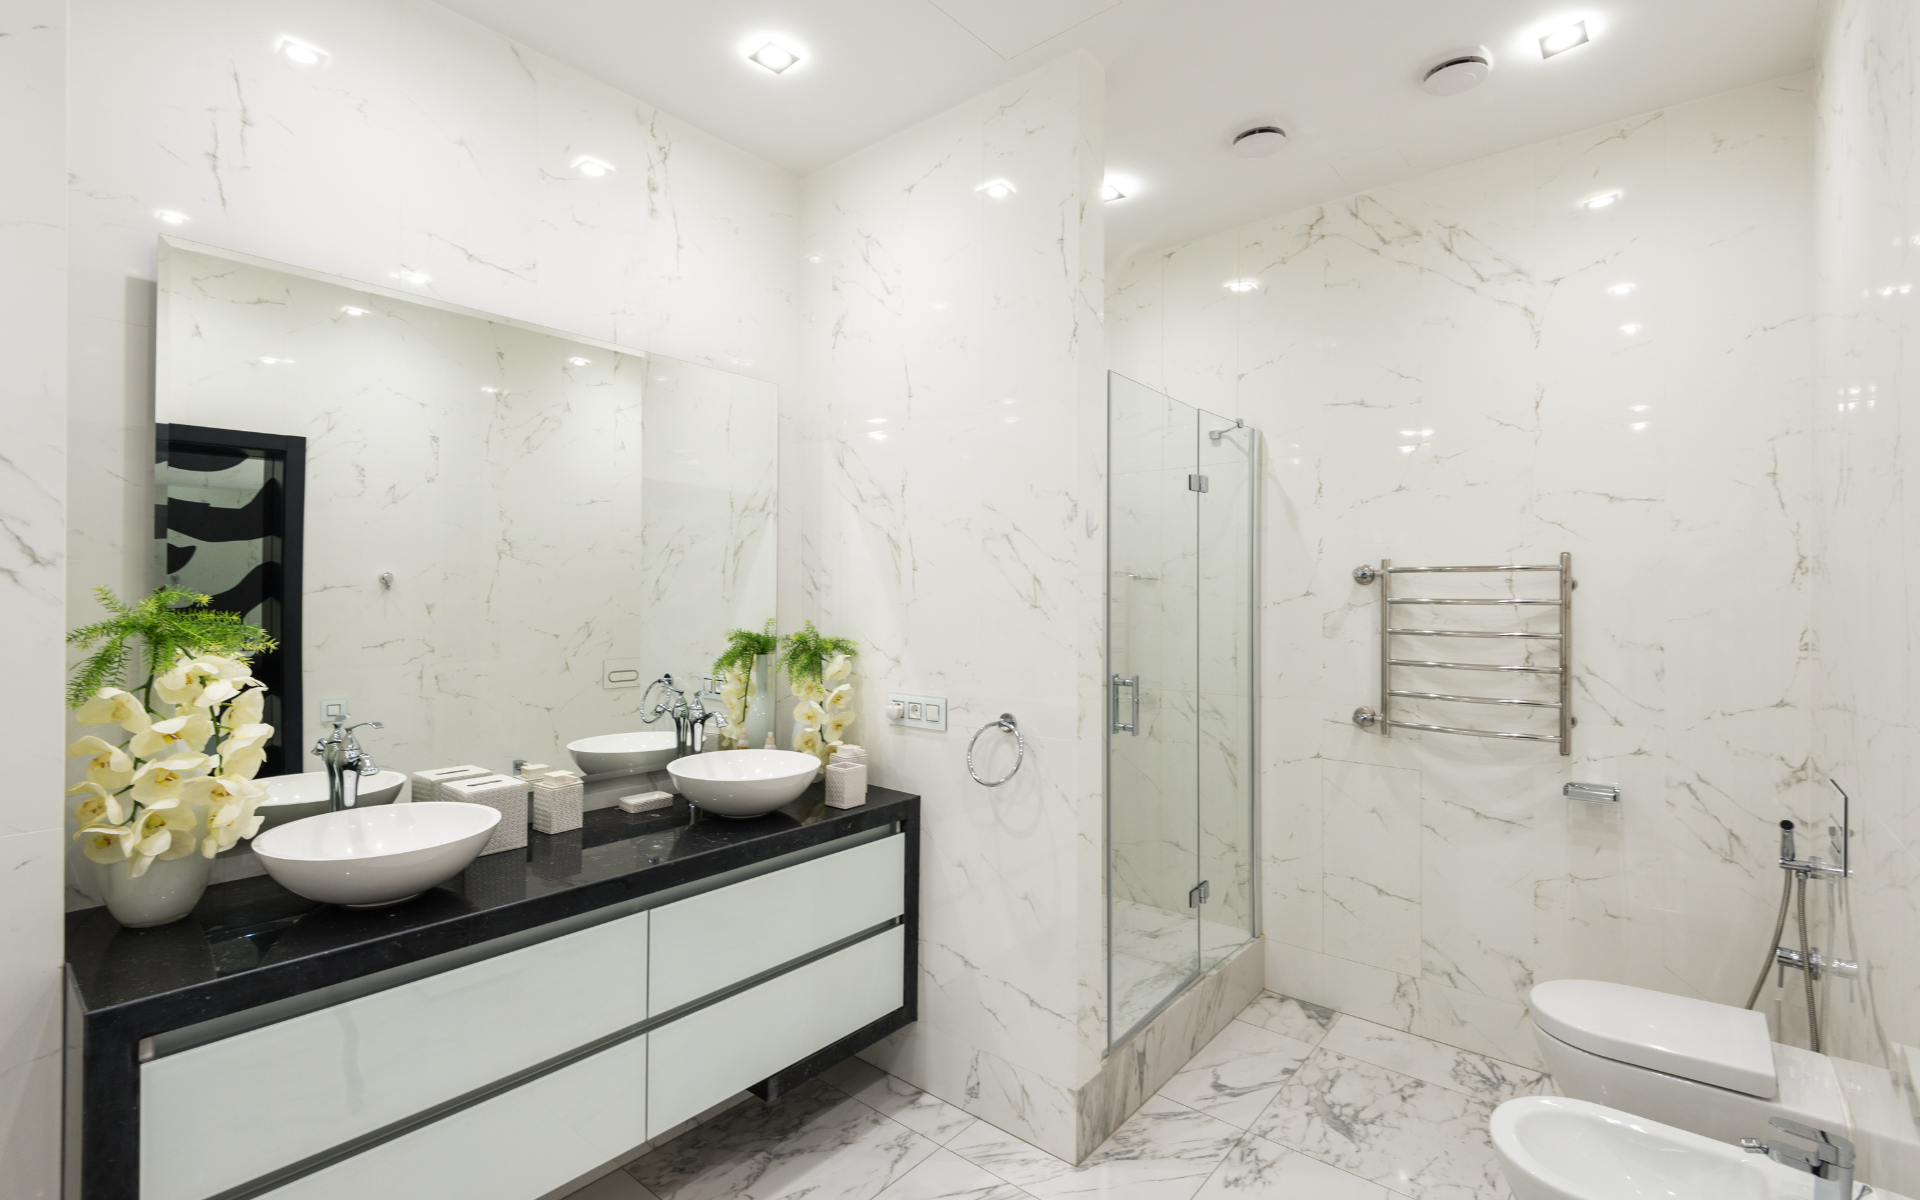 Elegant bathroom with great white lighting